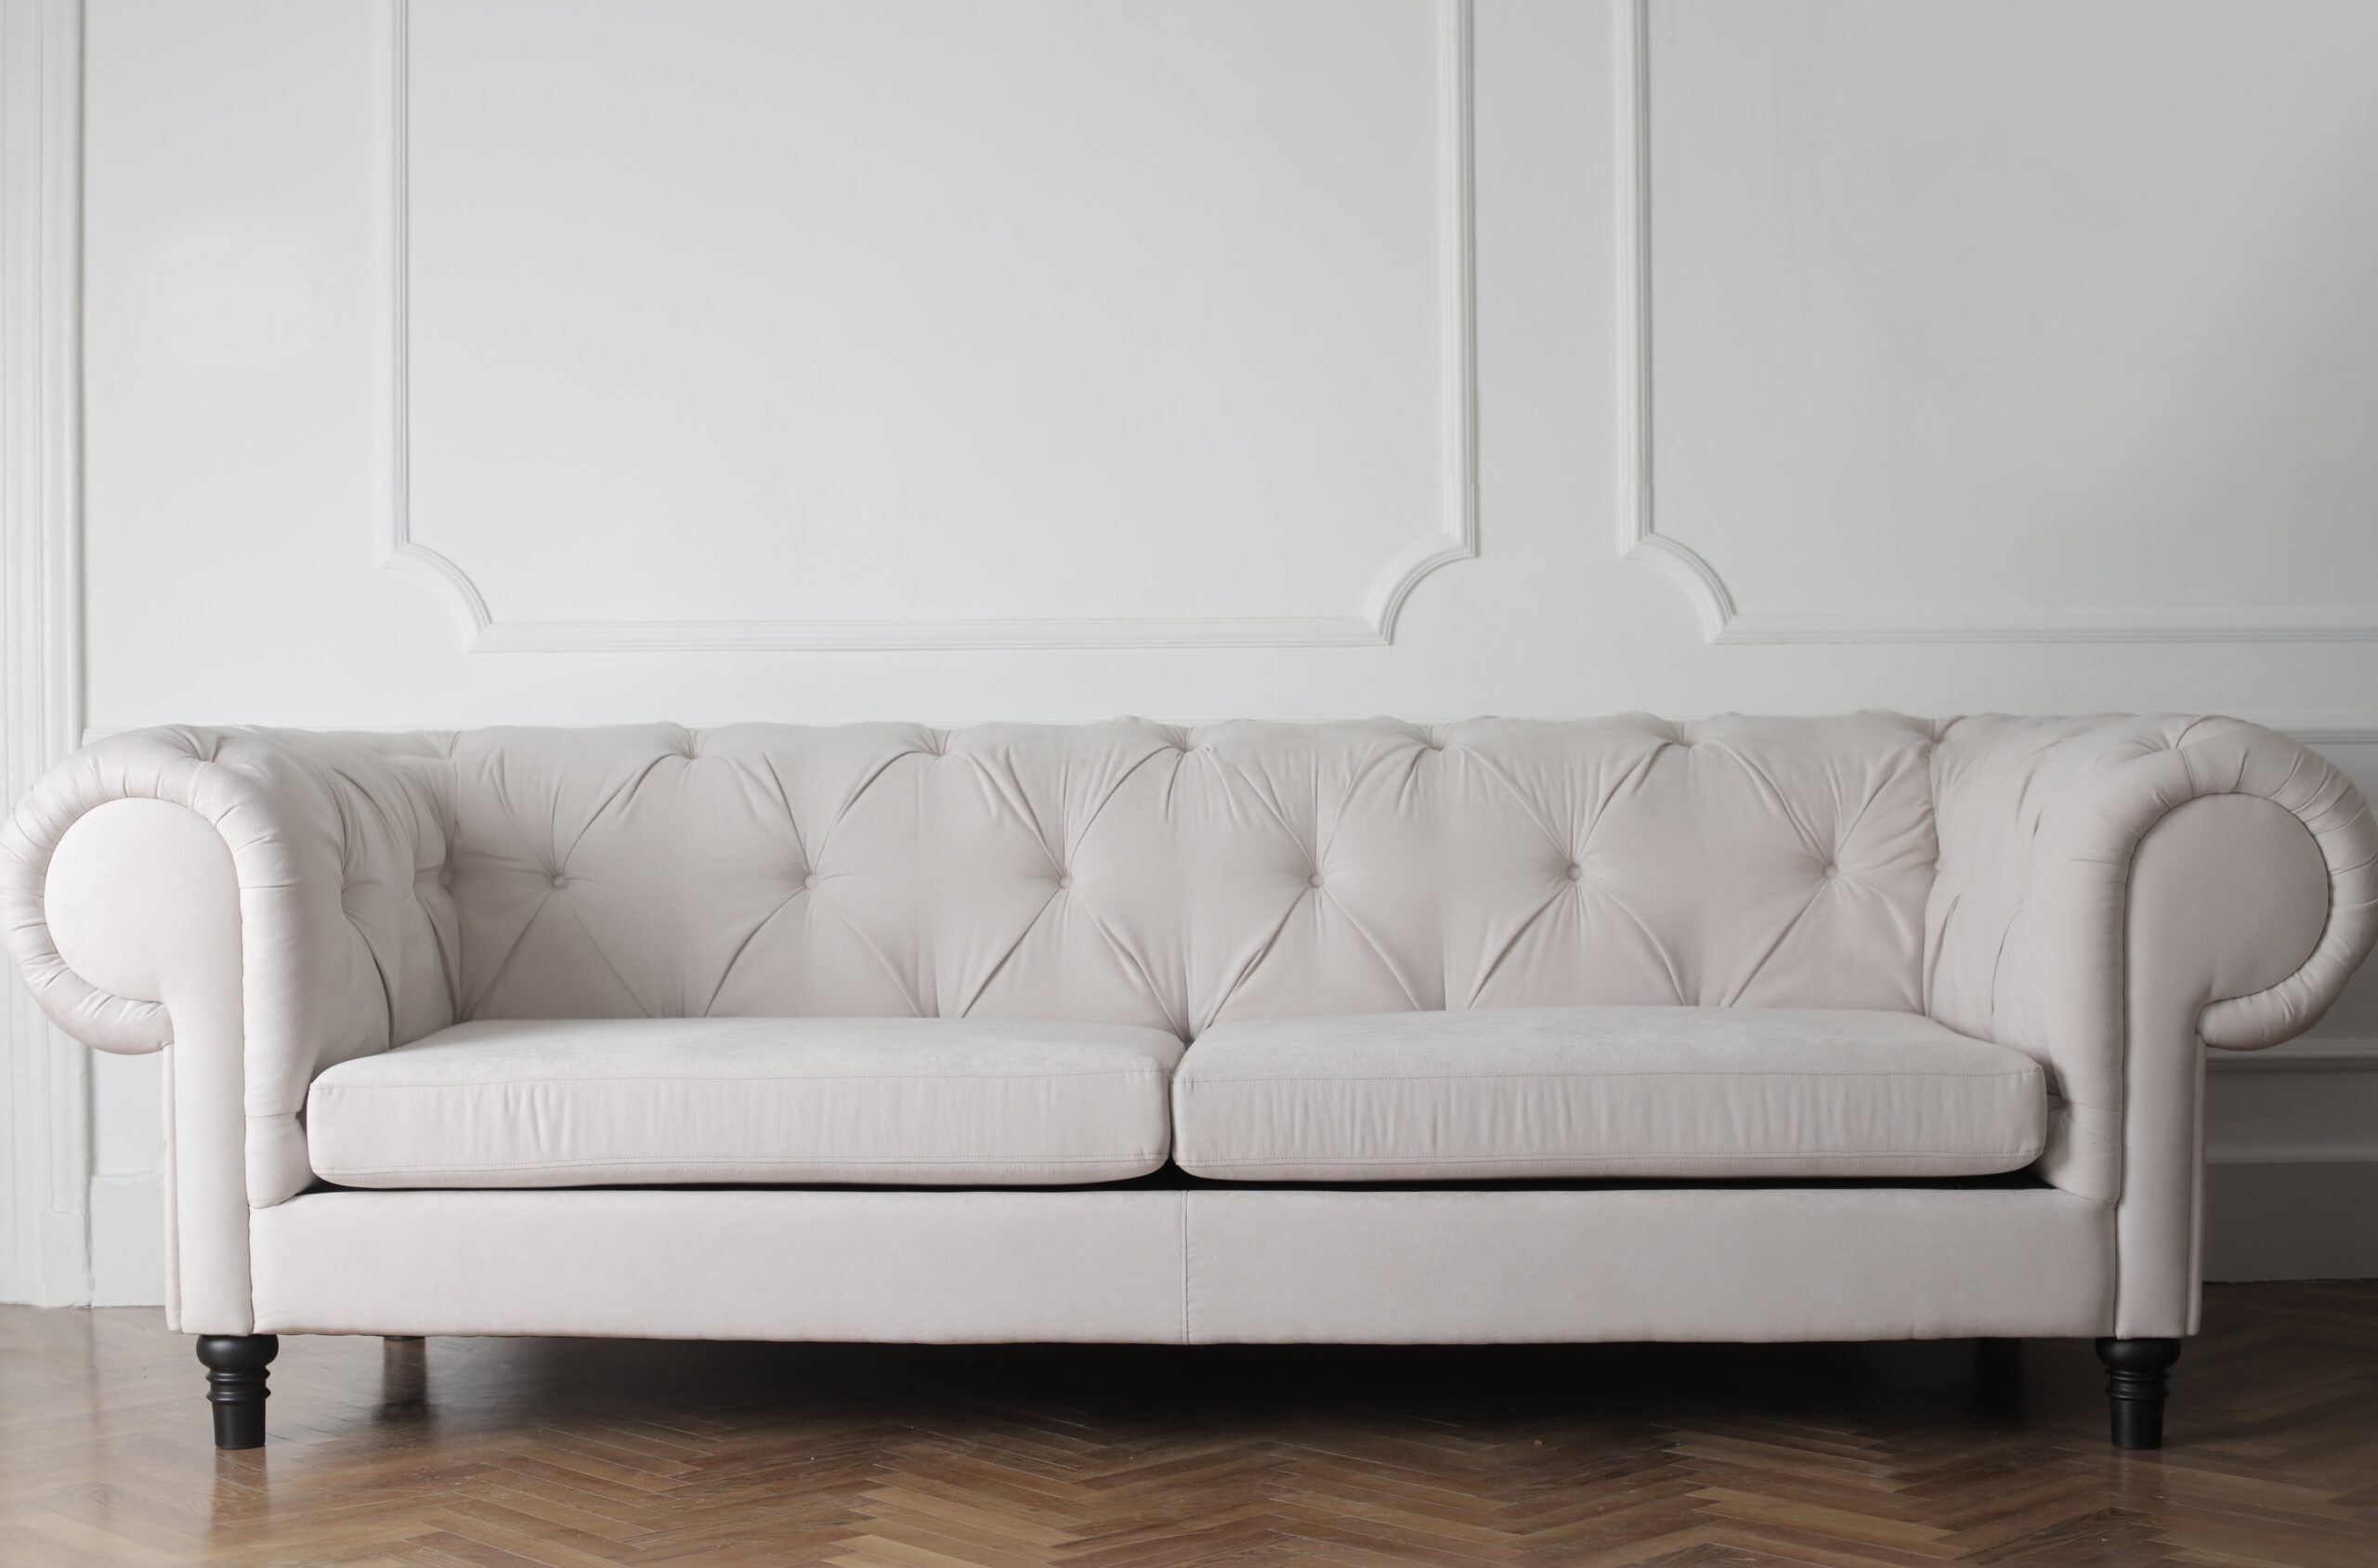 Vintage sofa 